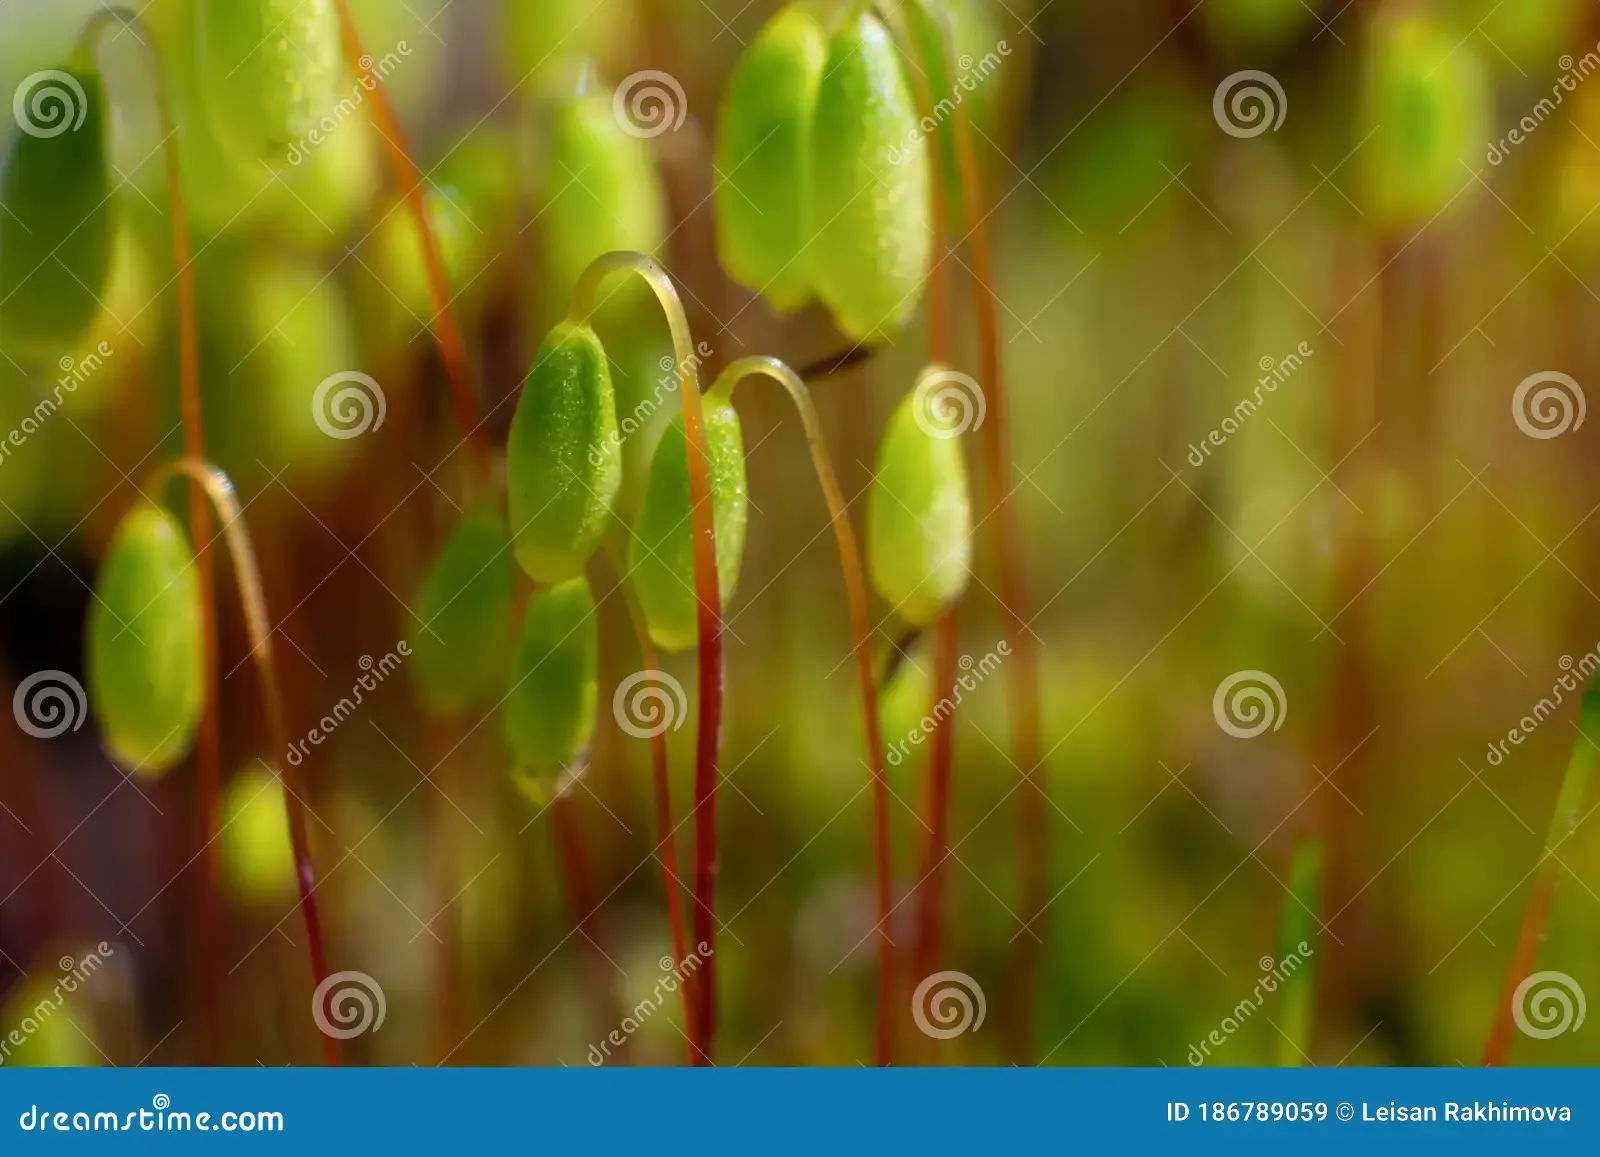 macro-bryum-moss-pohlia-nutans-green-spore-capsules-growing-ground-close-up-photo-macro-bryum-moss-pohlia-nutans-186789059.jpg